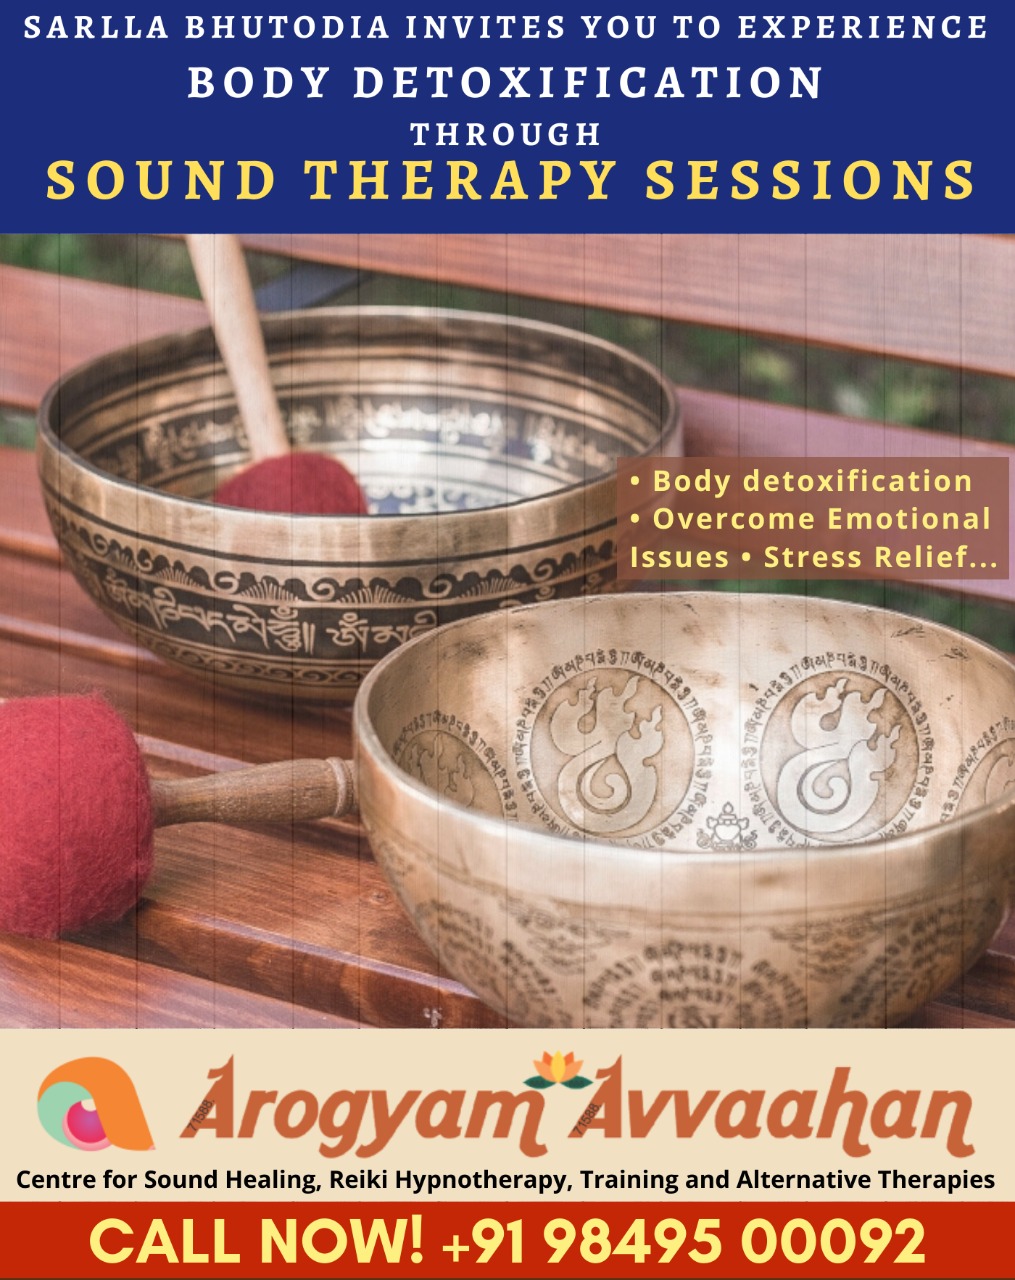 Body Detoxification through sound healing by Sarla Bhutoria- Patna